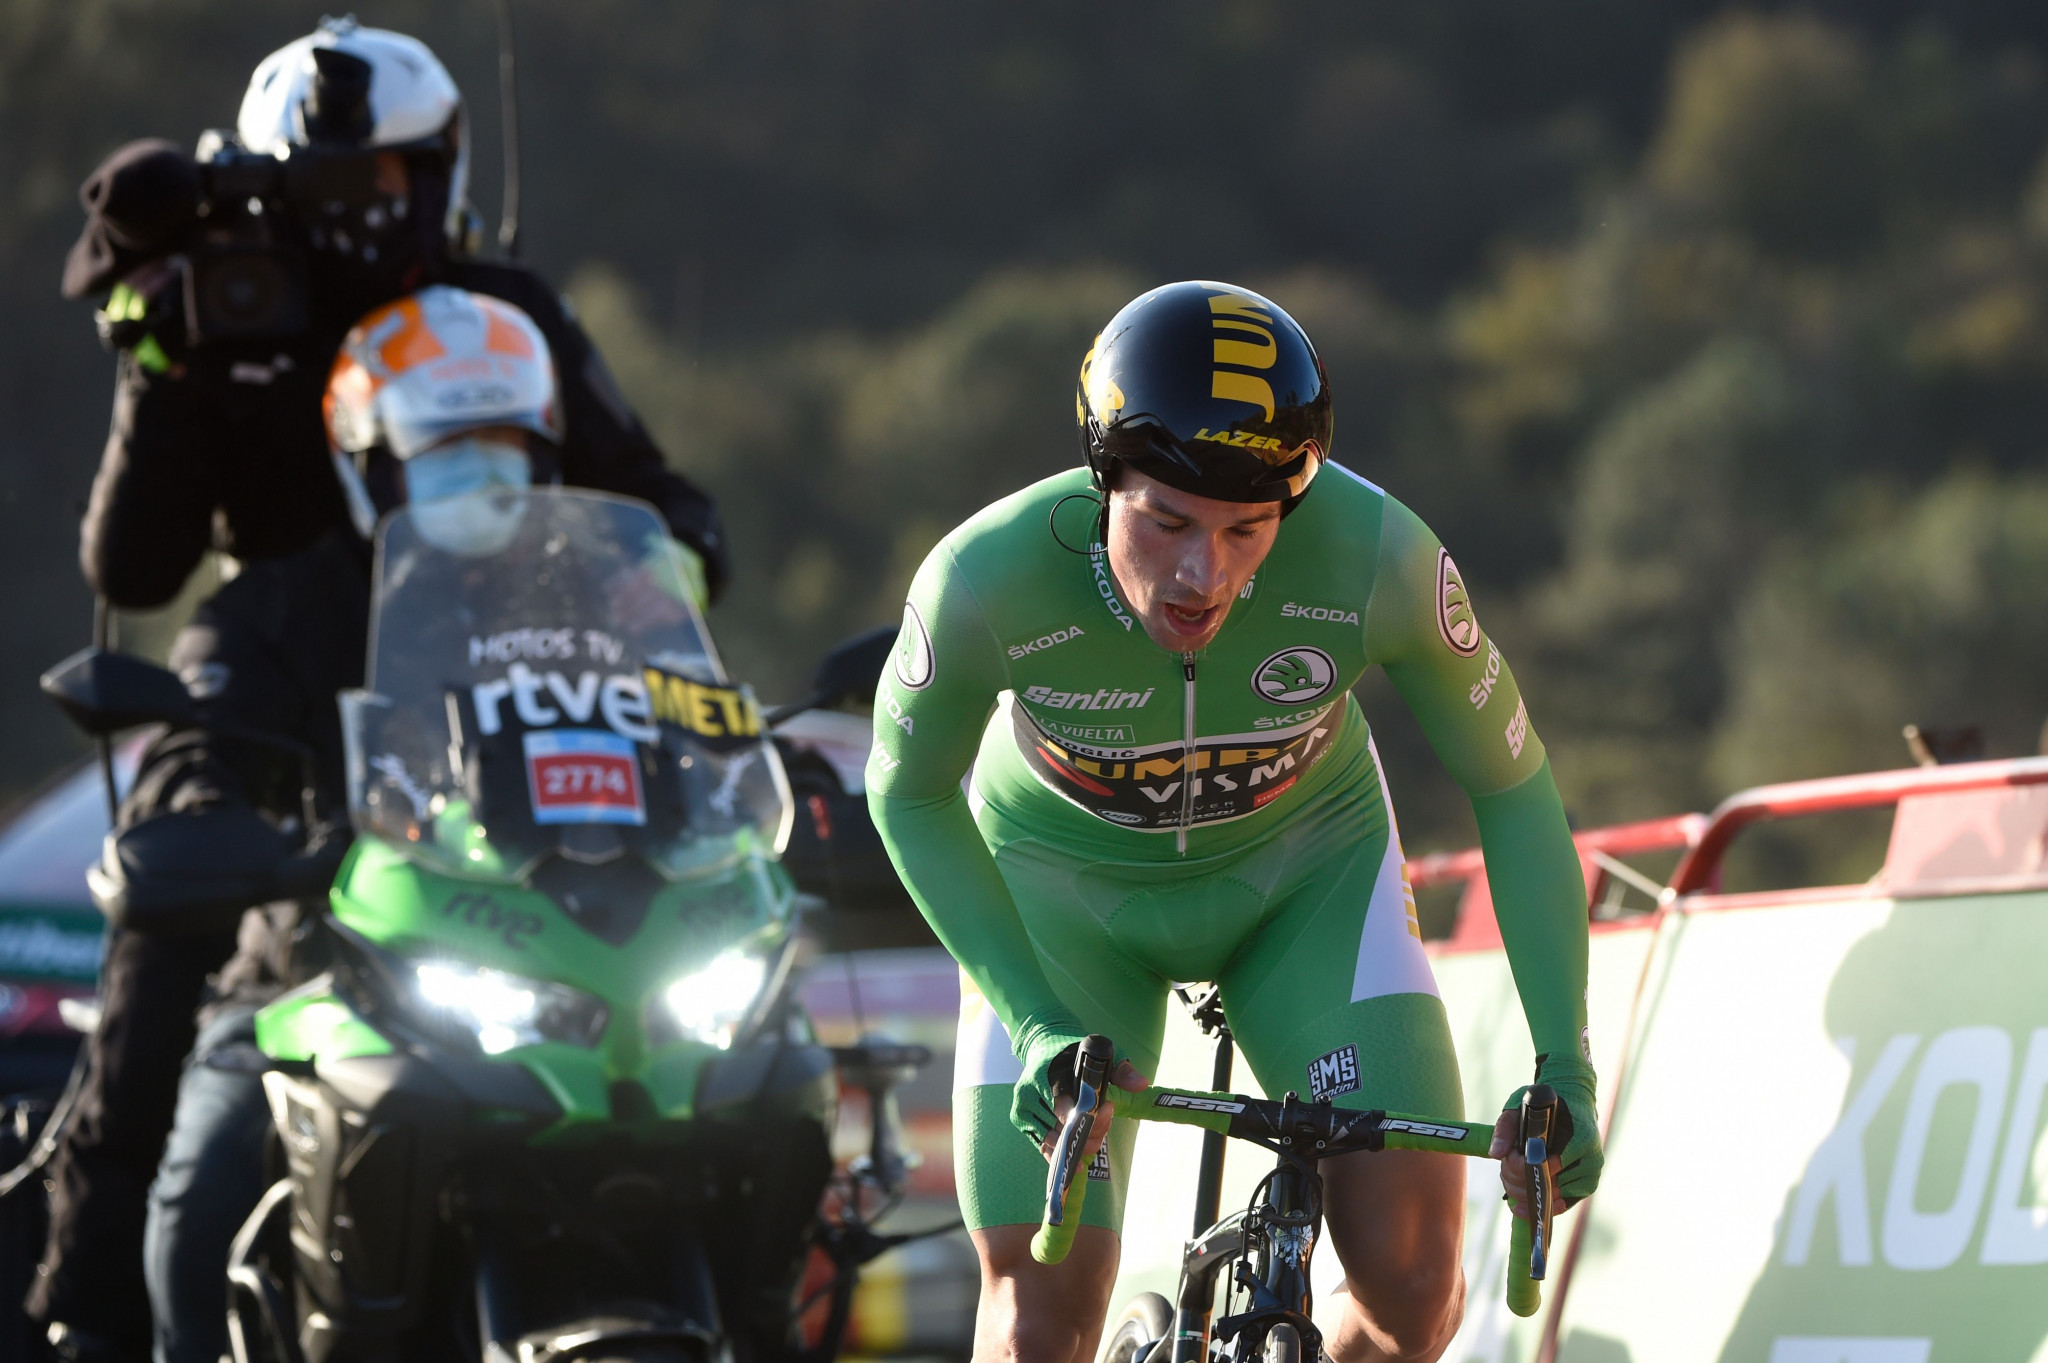 Roglič regains Vuelta a España race lead after winning time trial